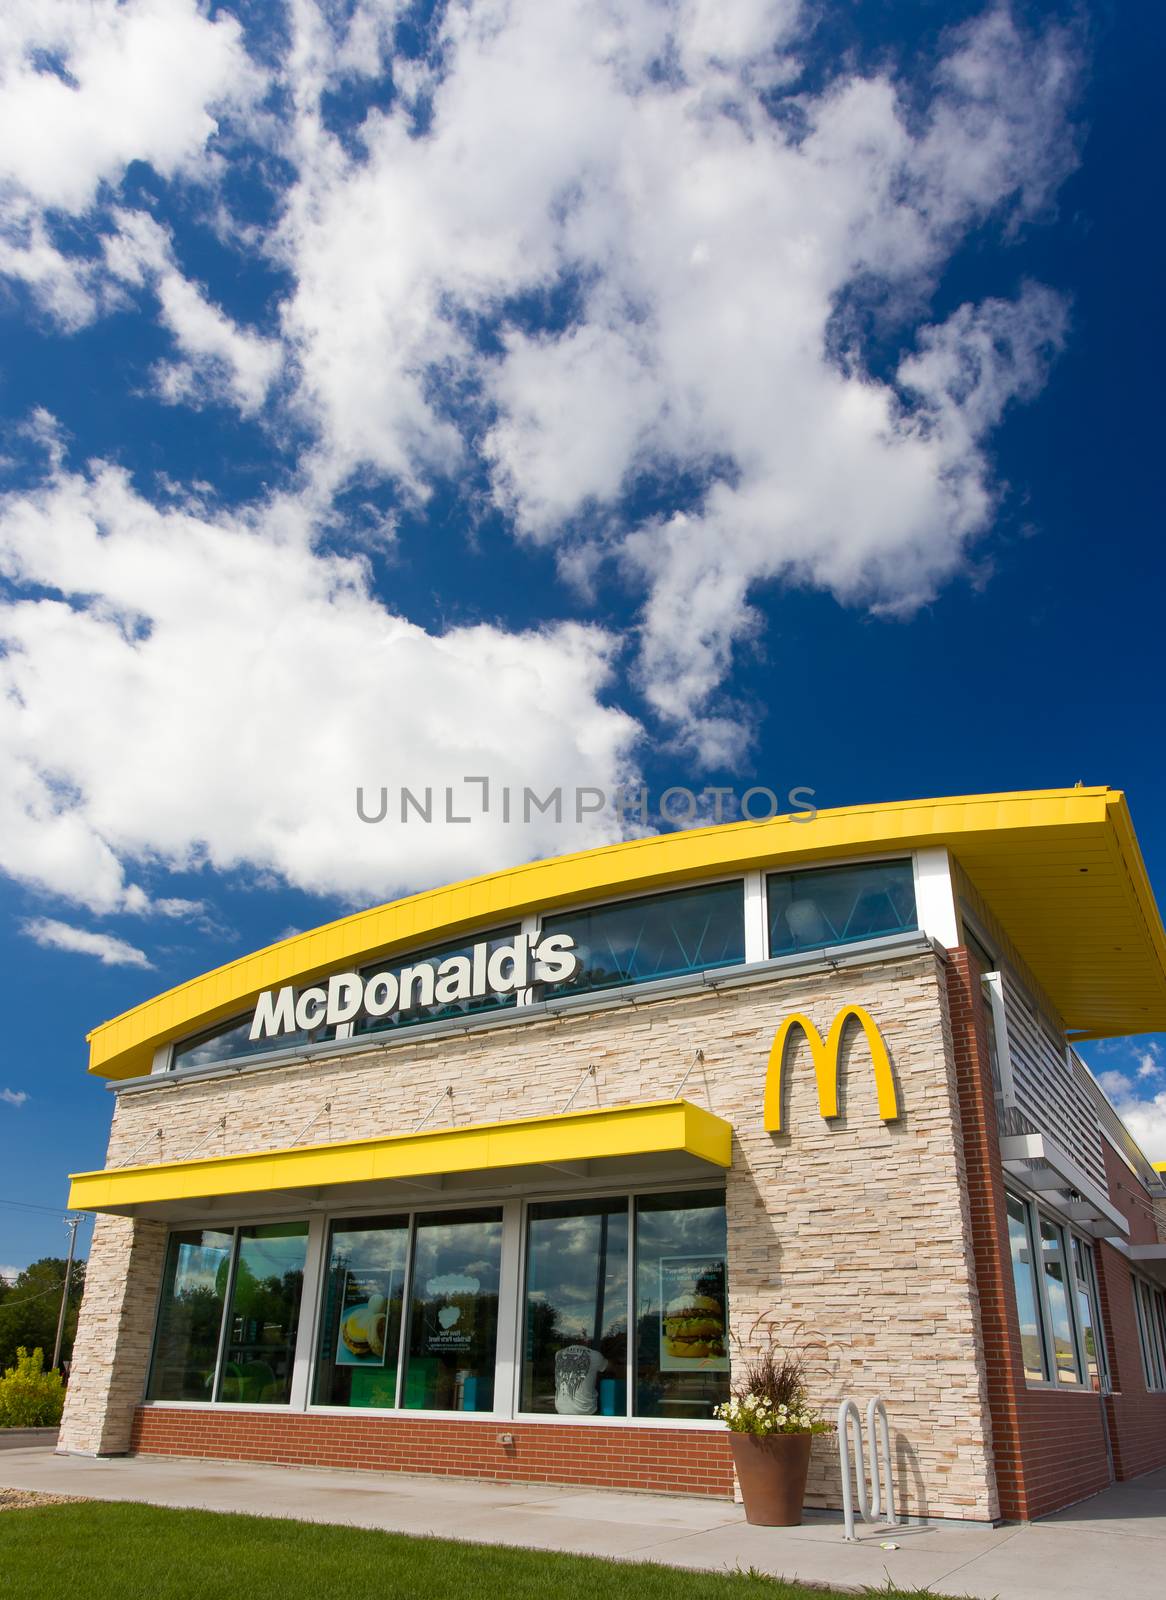 Contemporary McDonald's Restaurant Exterior by wolterk